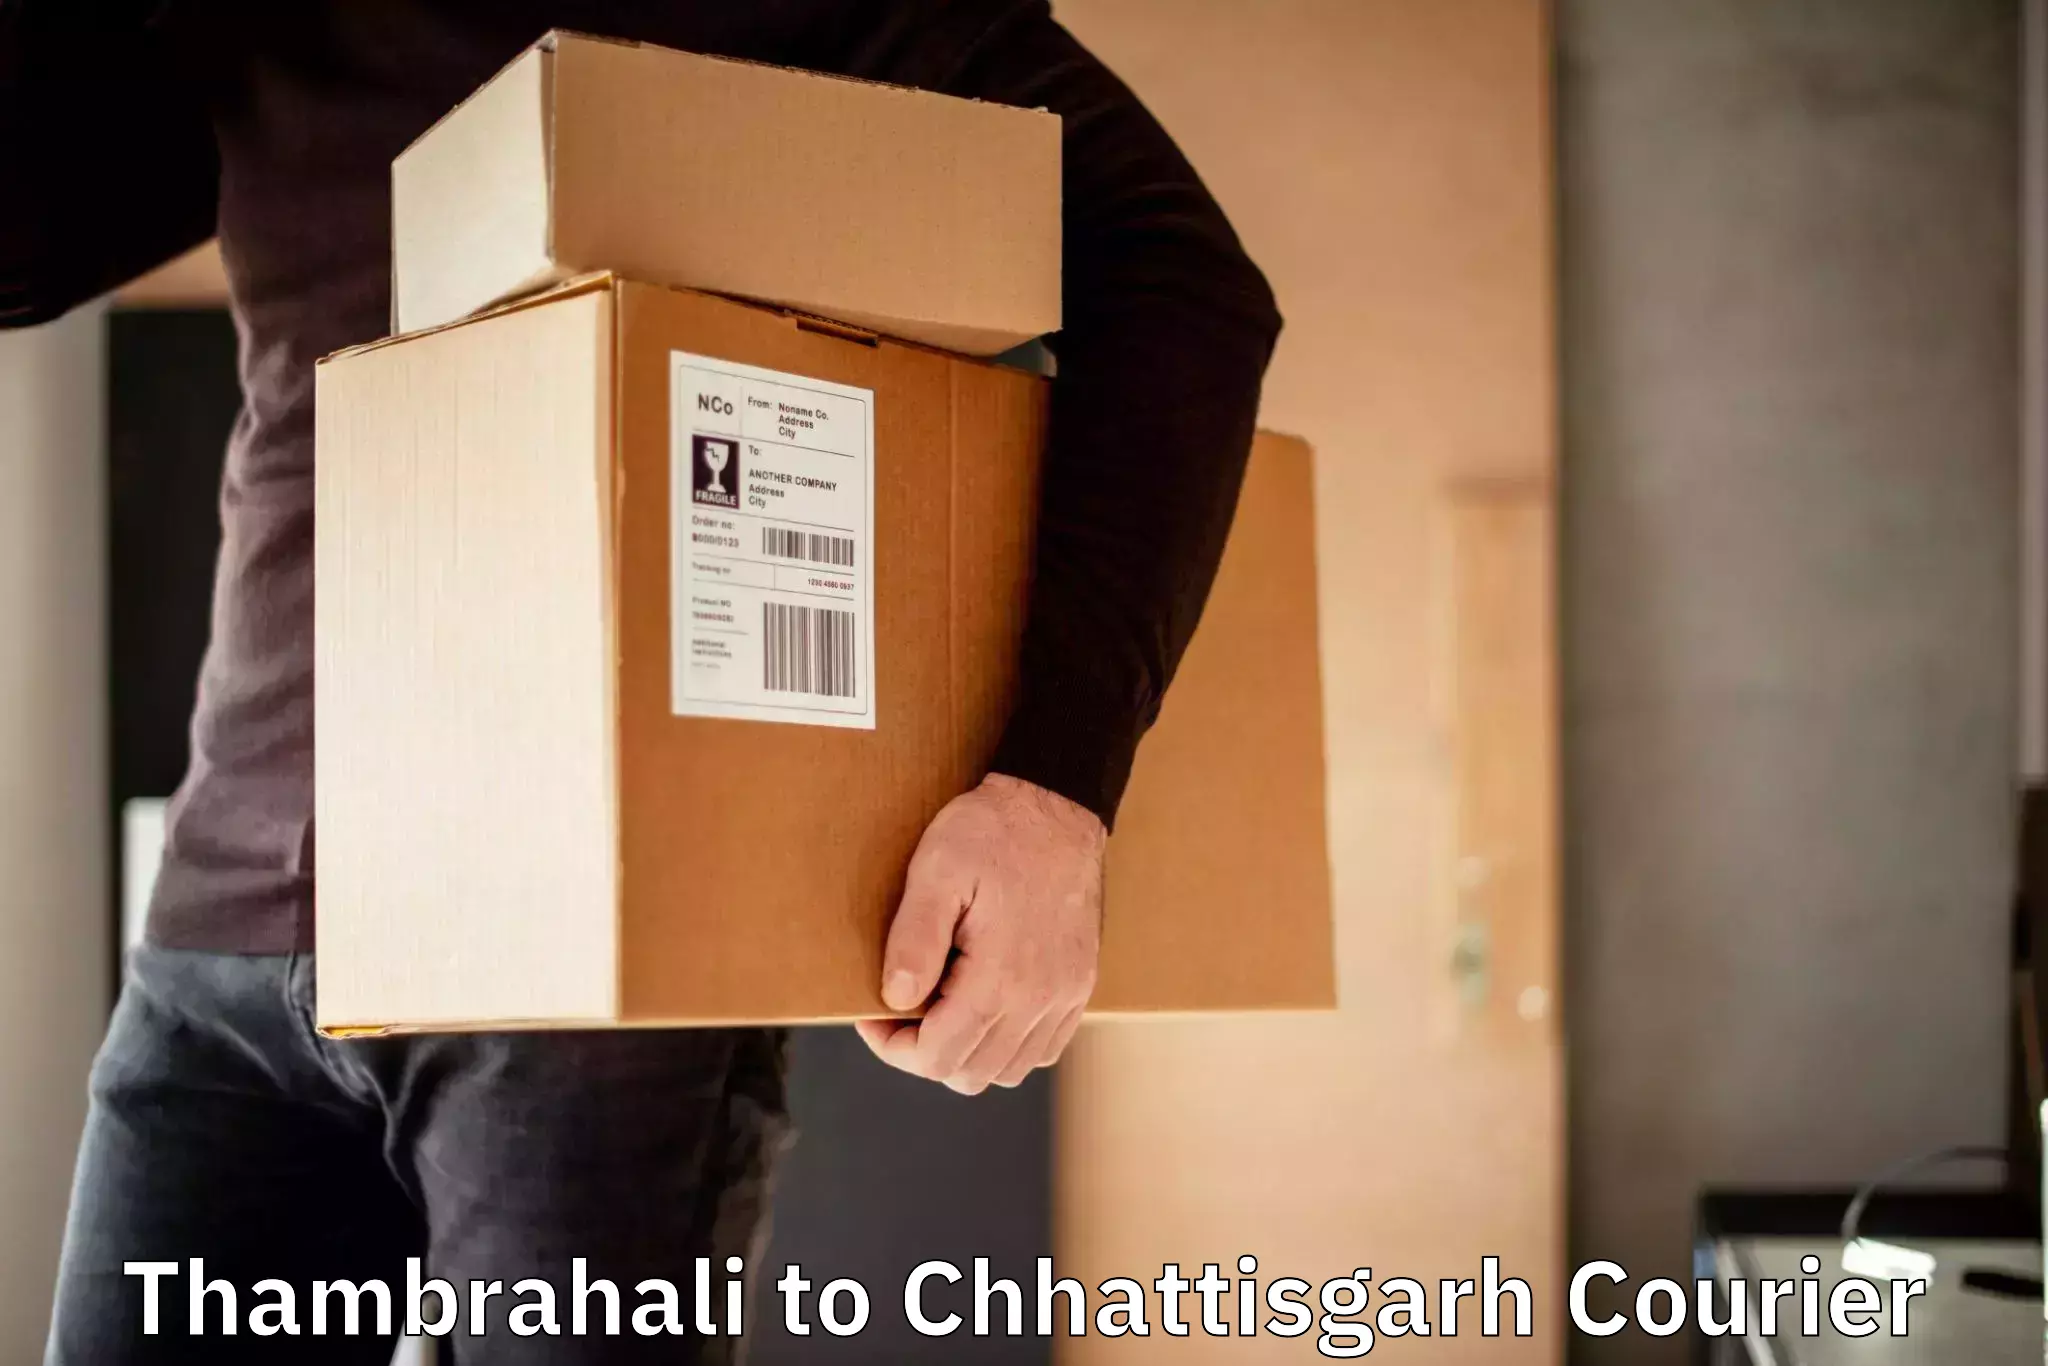 Modern delivery methods Thambrahali to Chhattisgarh